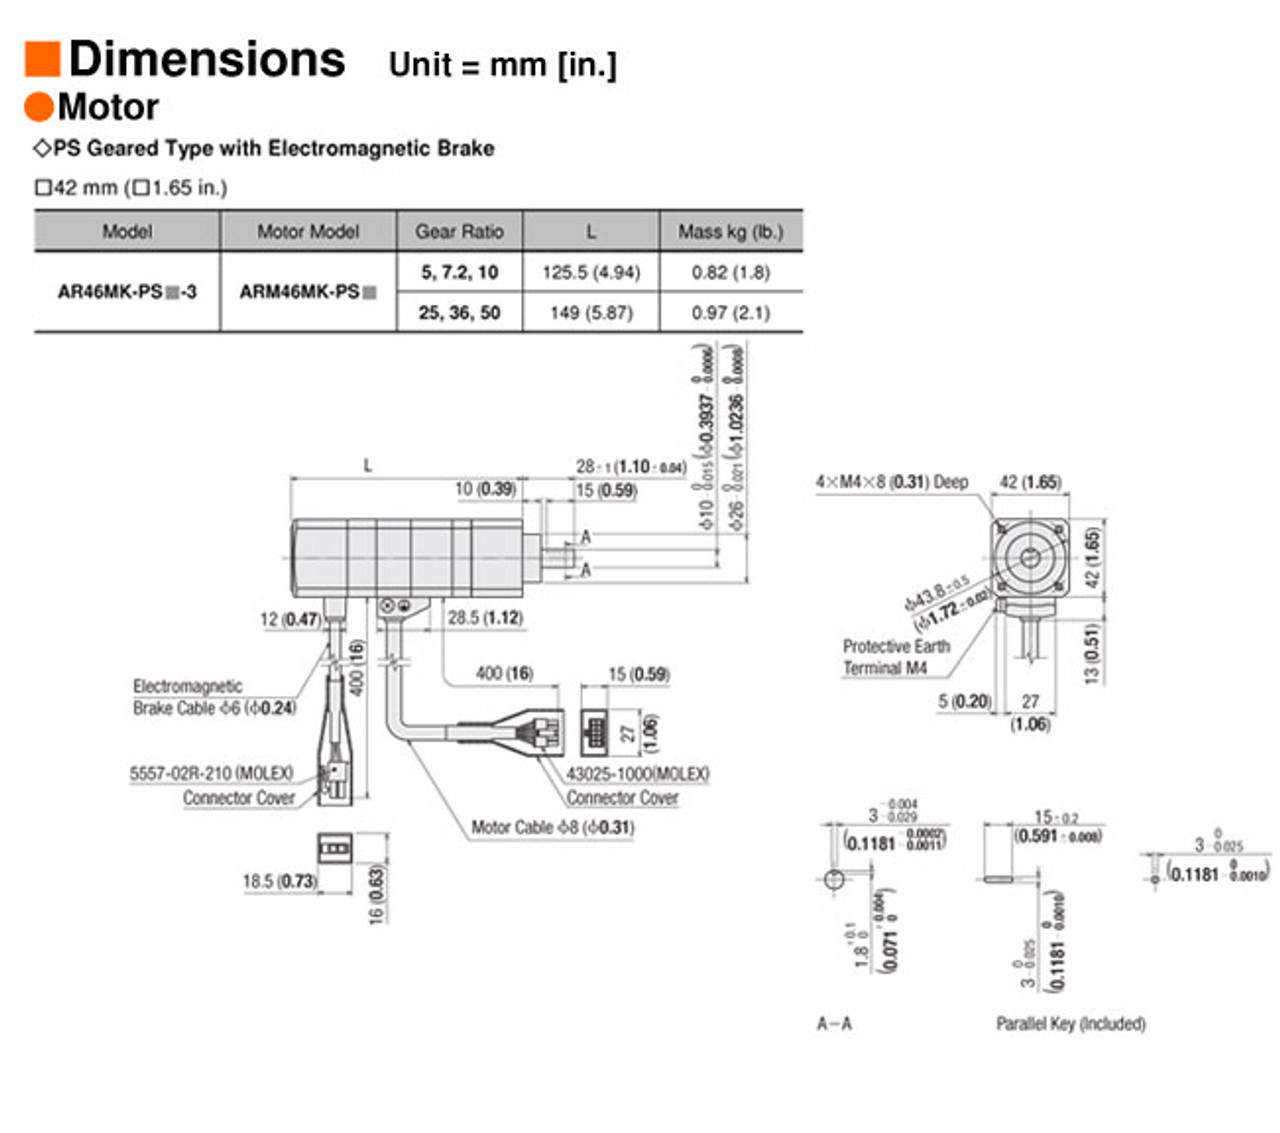 ARM46MK-PS5 - Dimensions